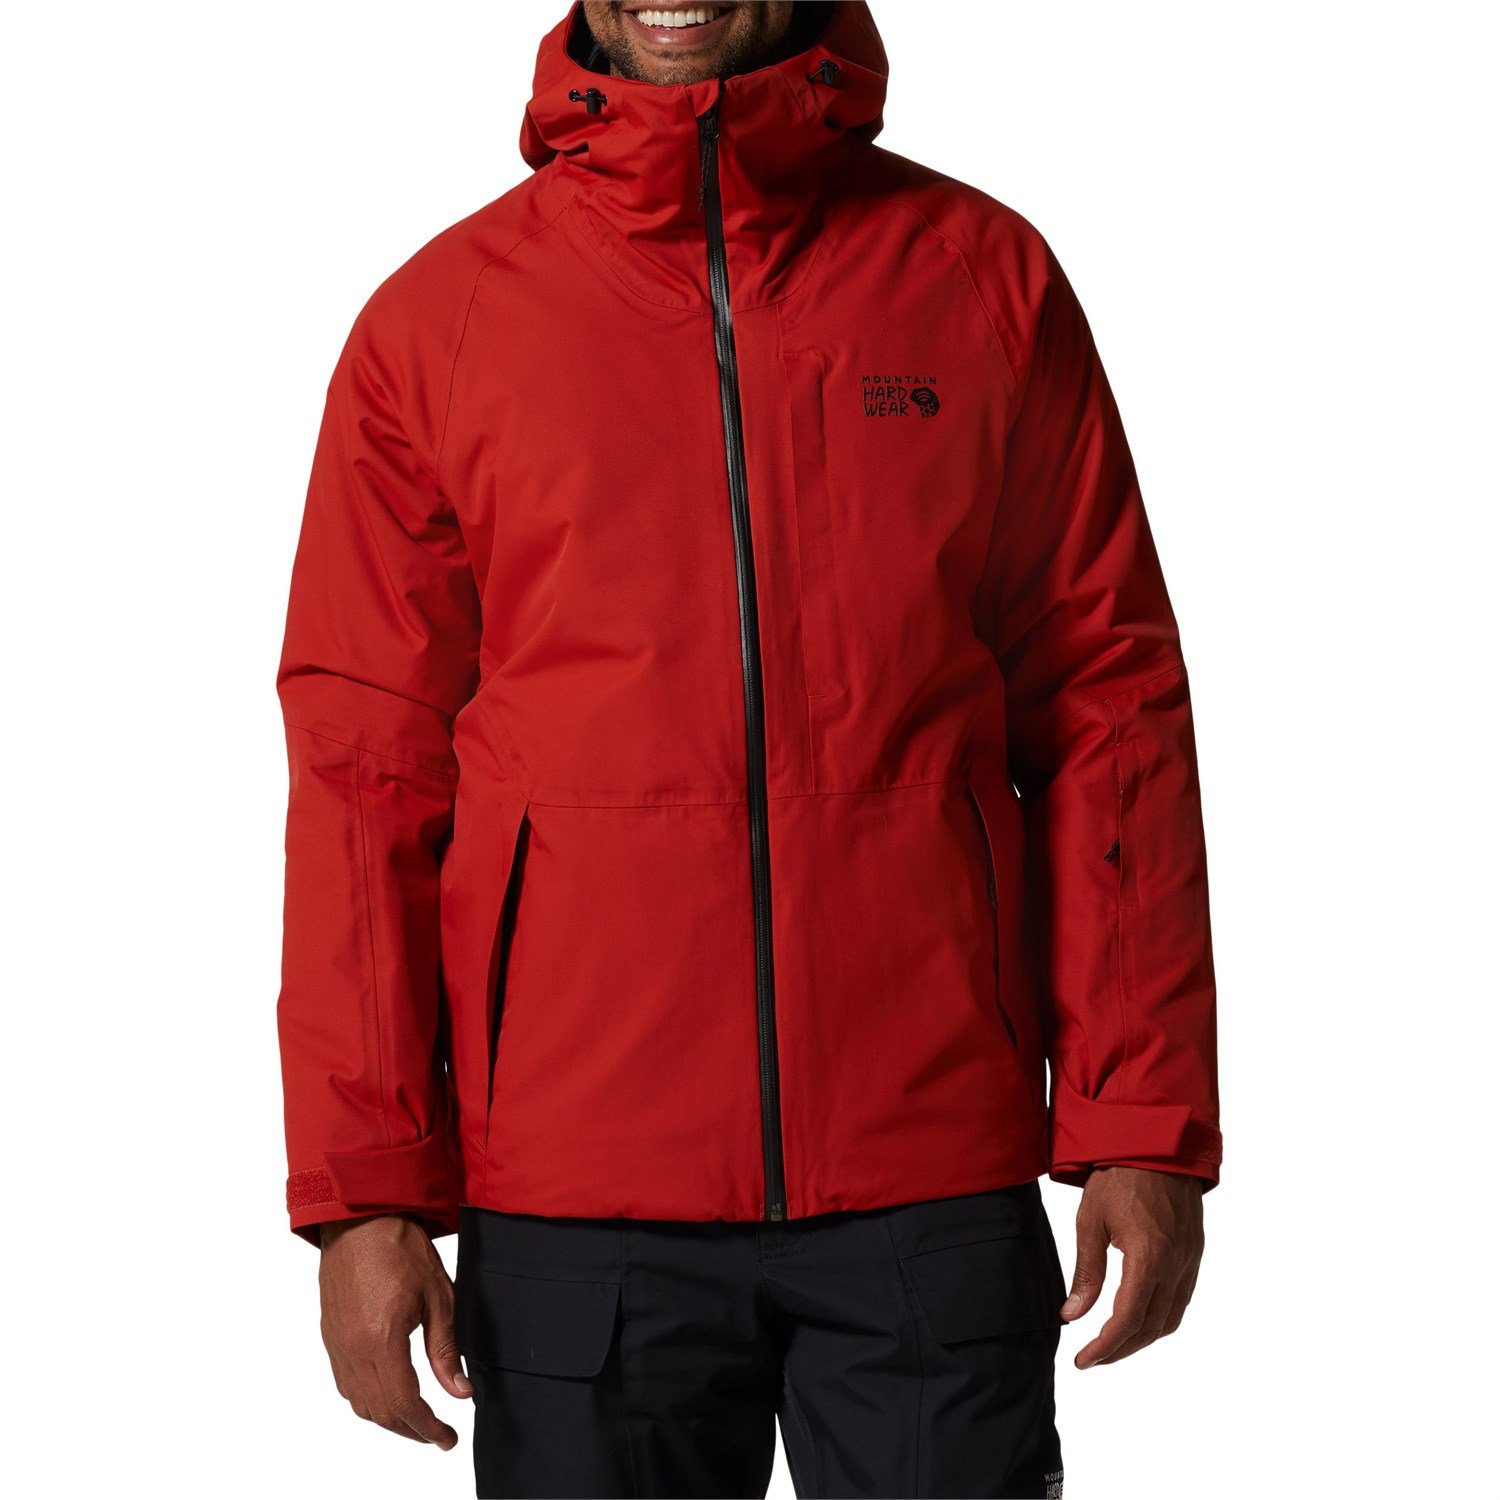 Куртка Mountain Hardwear FireFall/2 утепленная, красный куртка утепленная женская luhta inkoo красный размер 48